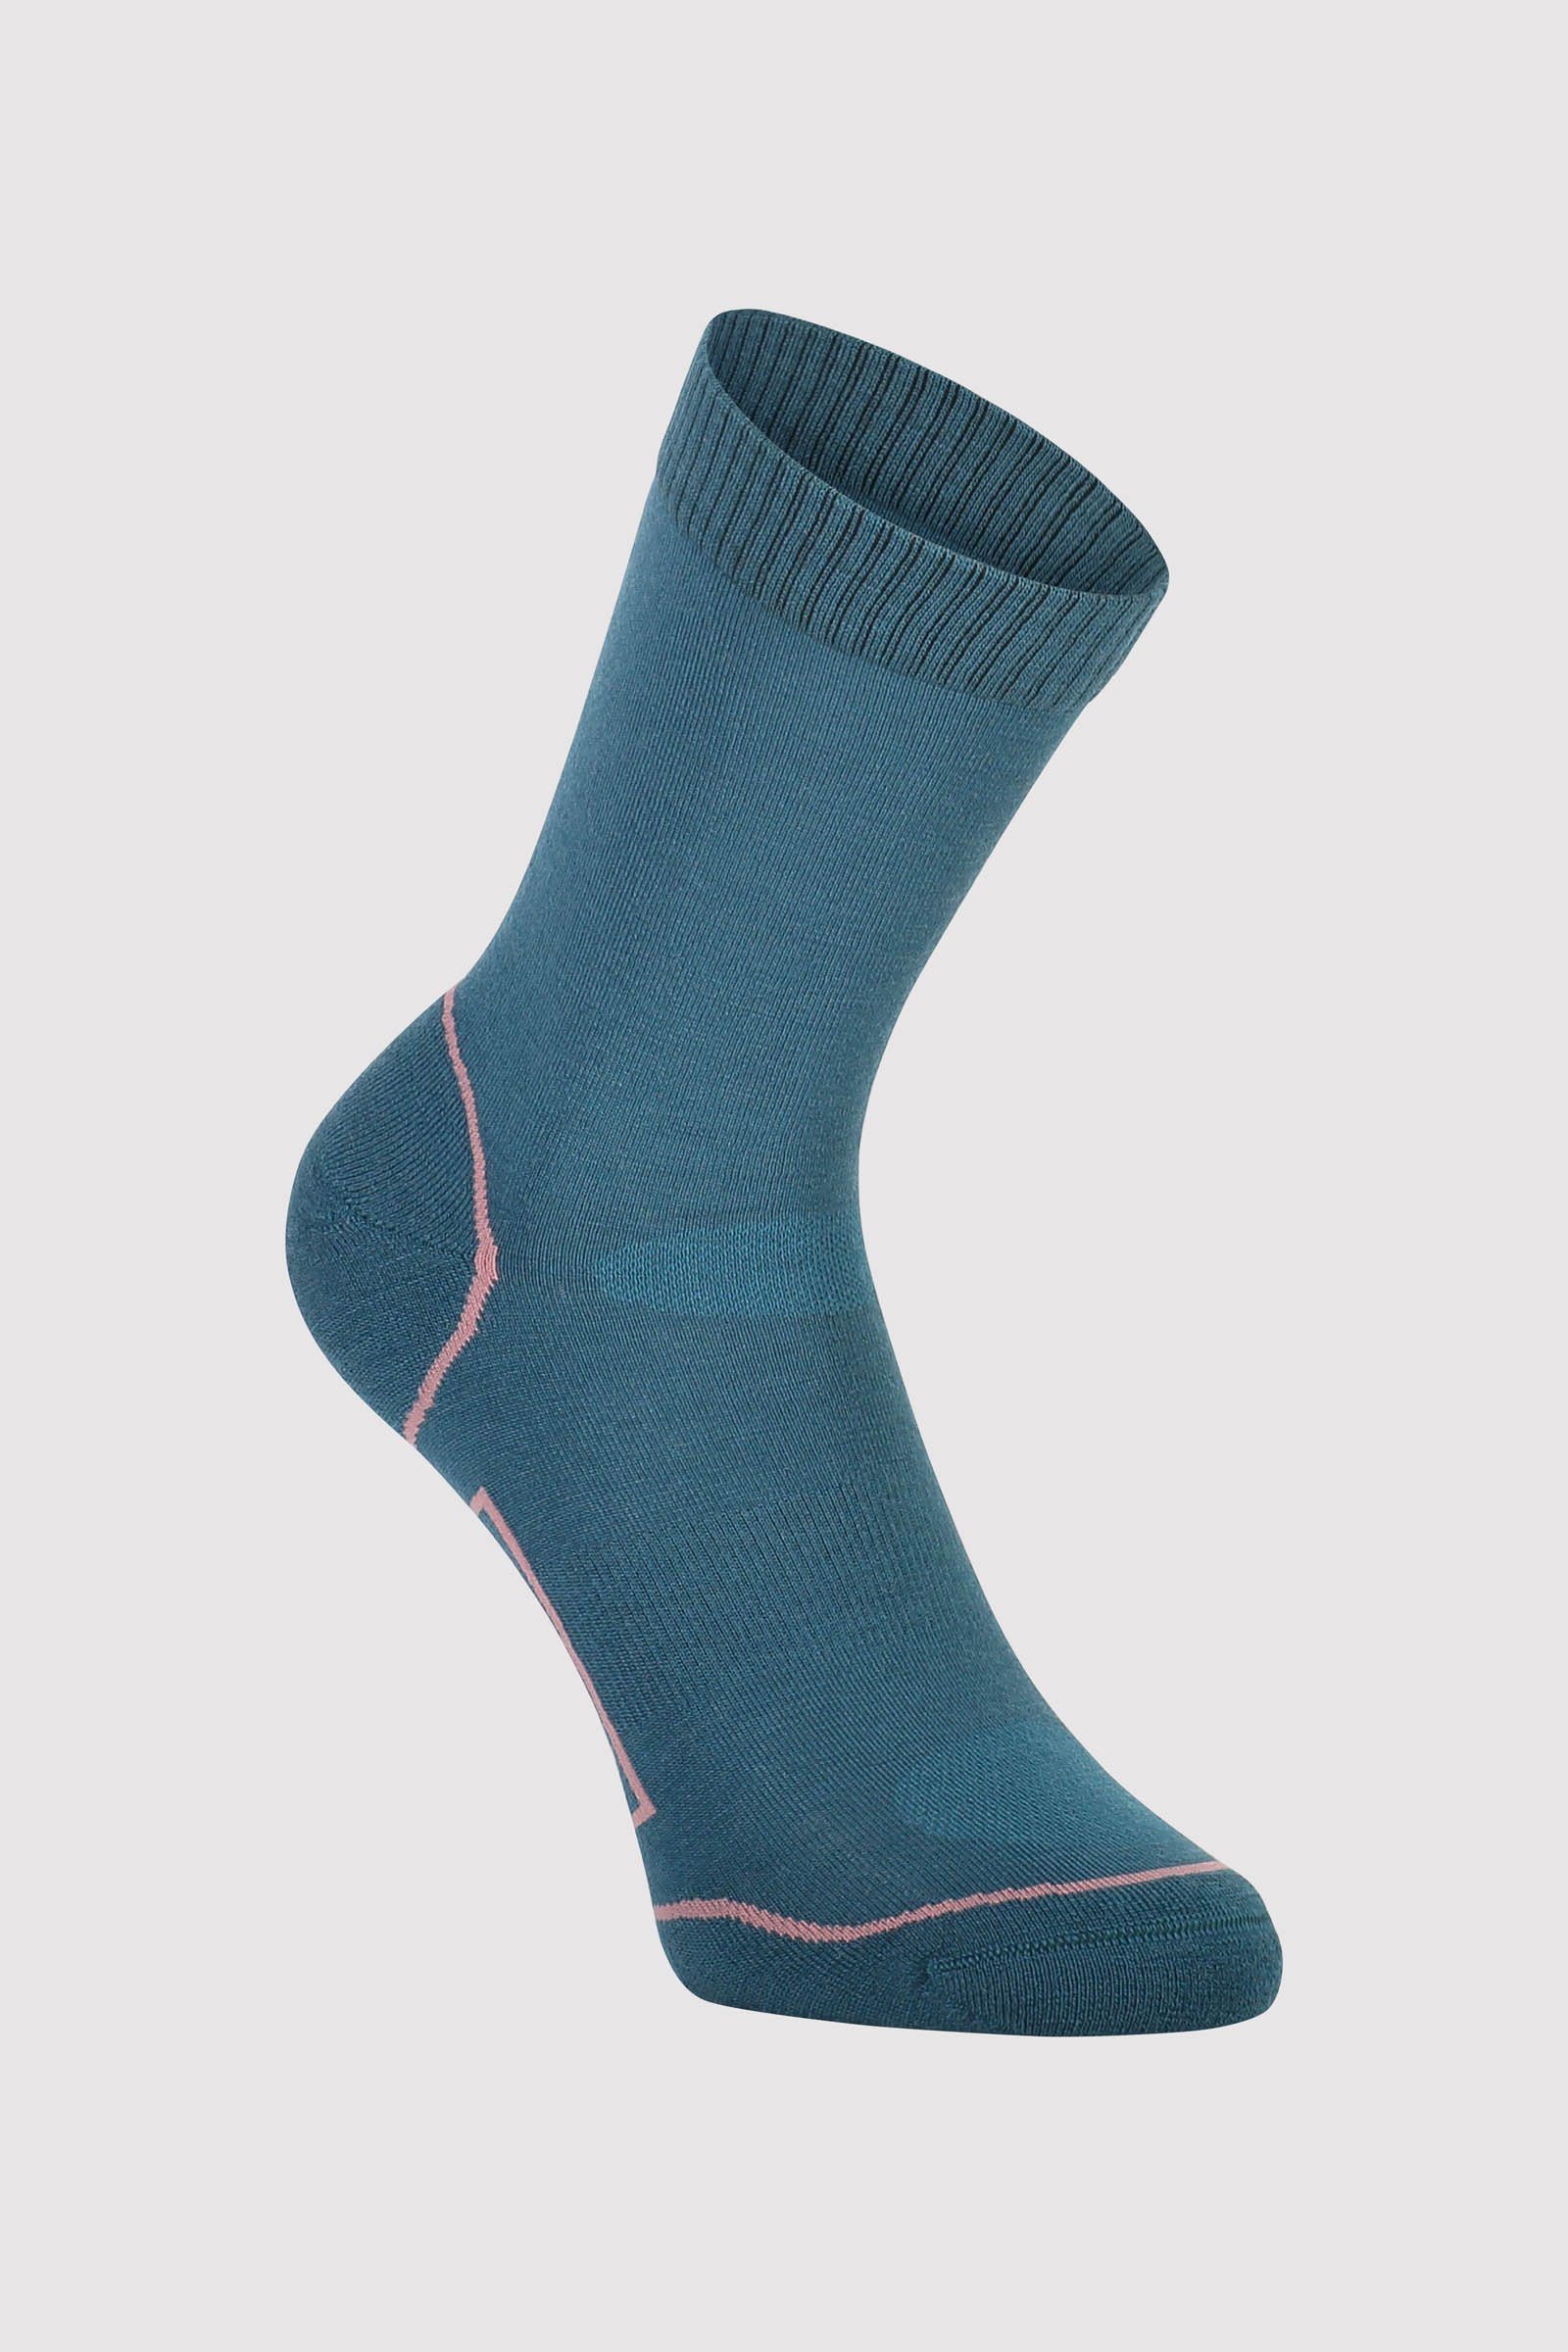 Mons Royale Unisex Tech Bike Sock 2.0 - Merino Wool, Deep Teal / 35-37